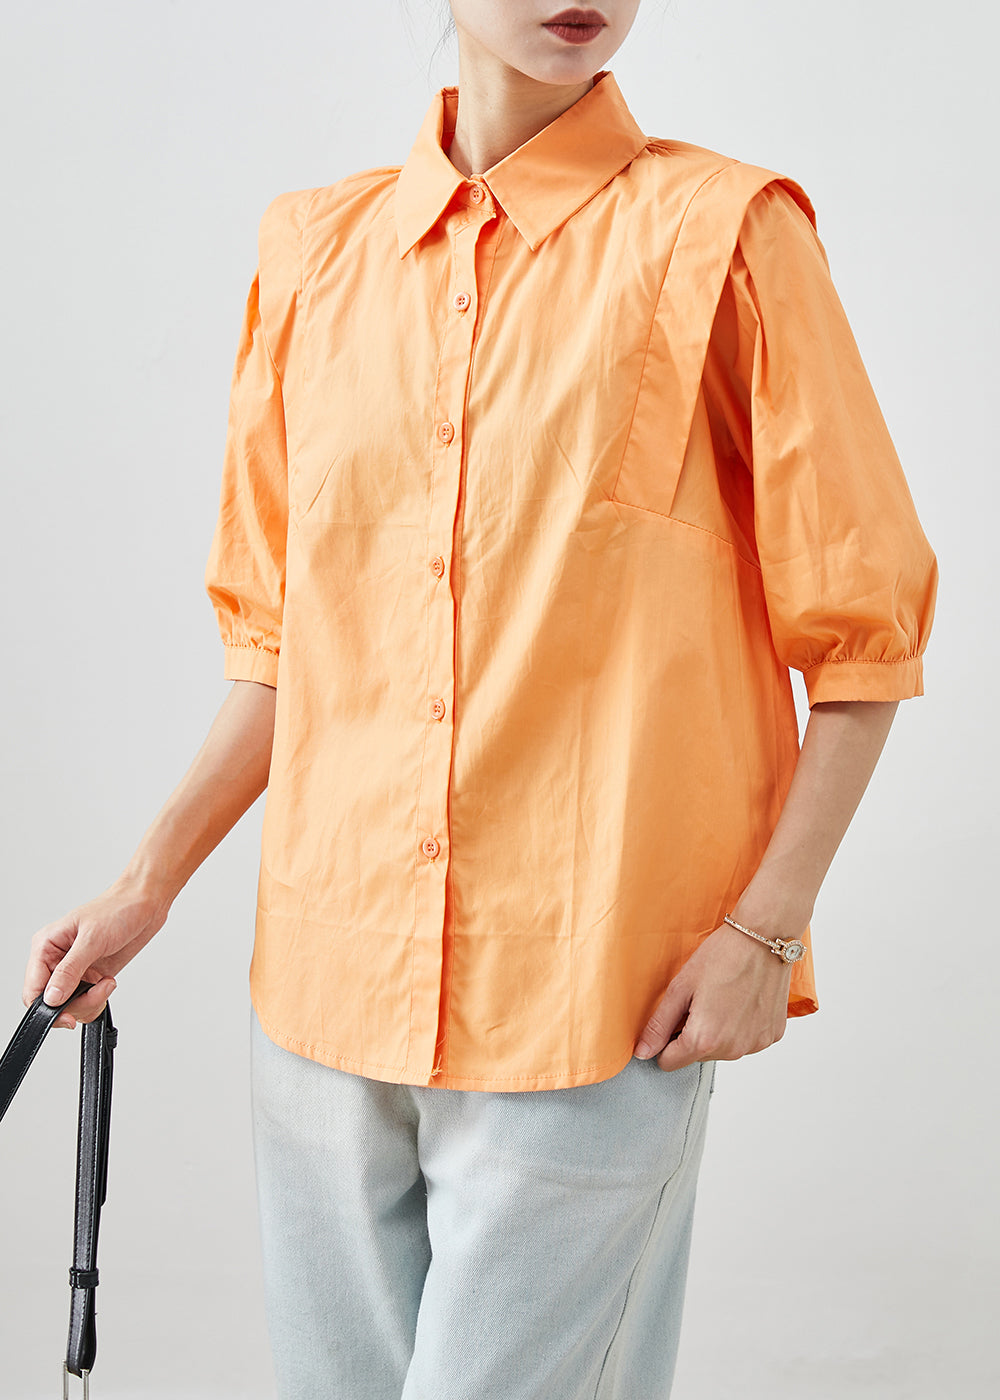 Chic Orange Peter Pan Collar Patchwork Cotton Shirts Half Sleeve Ada Fashion